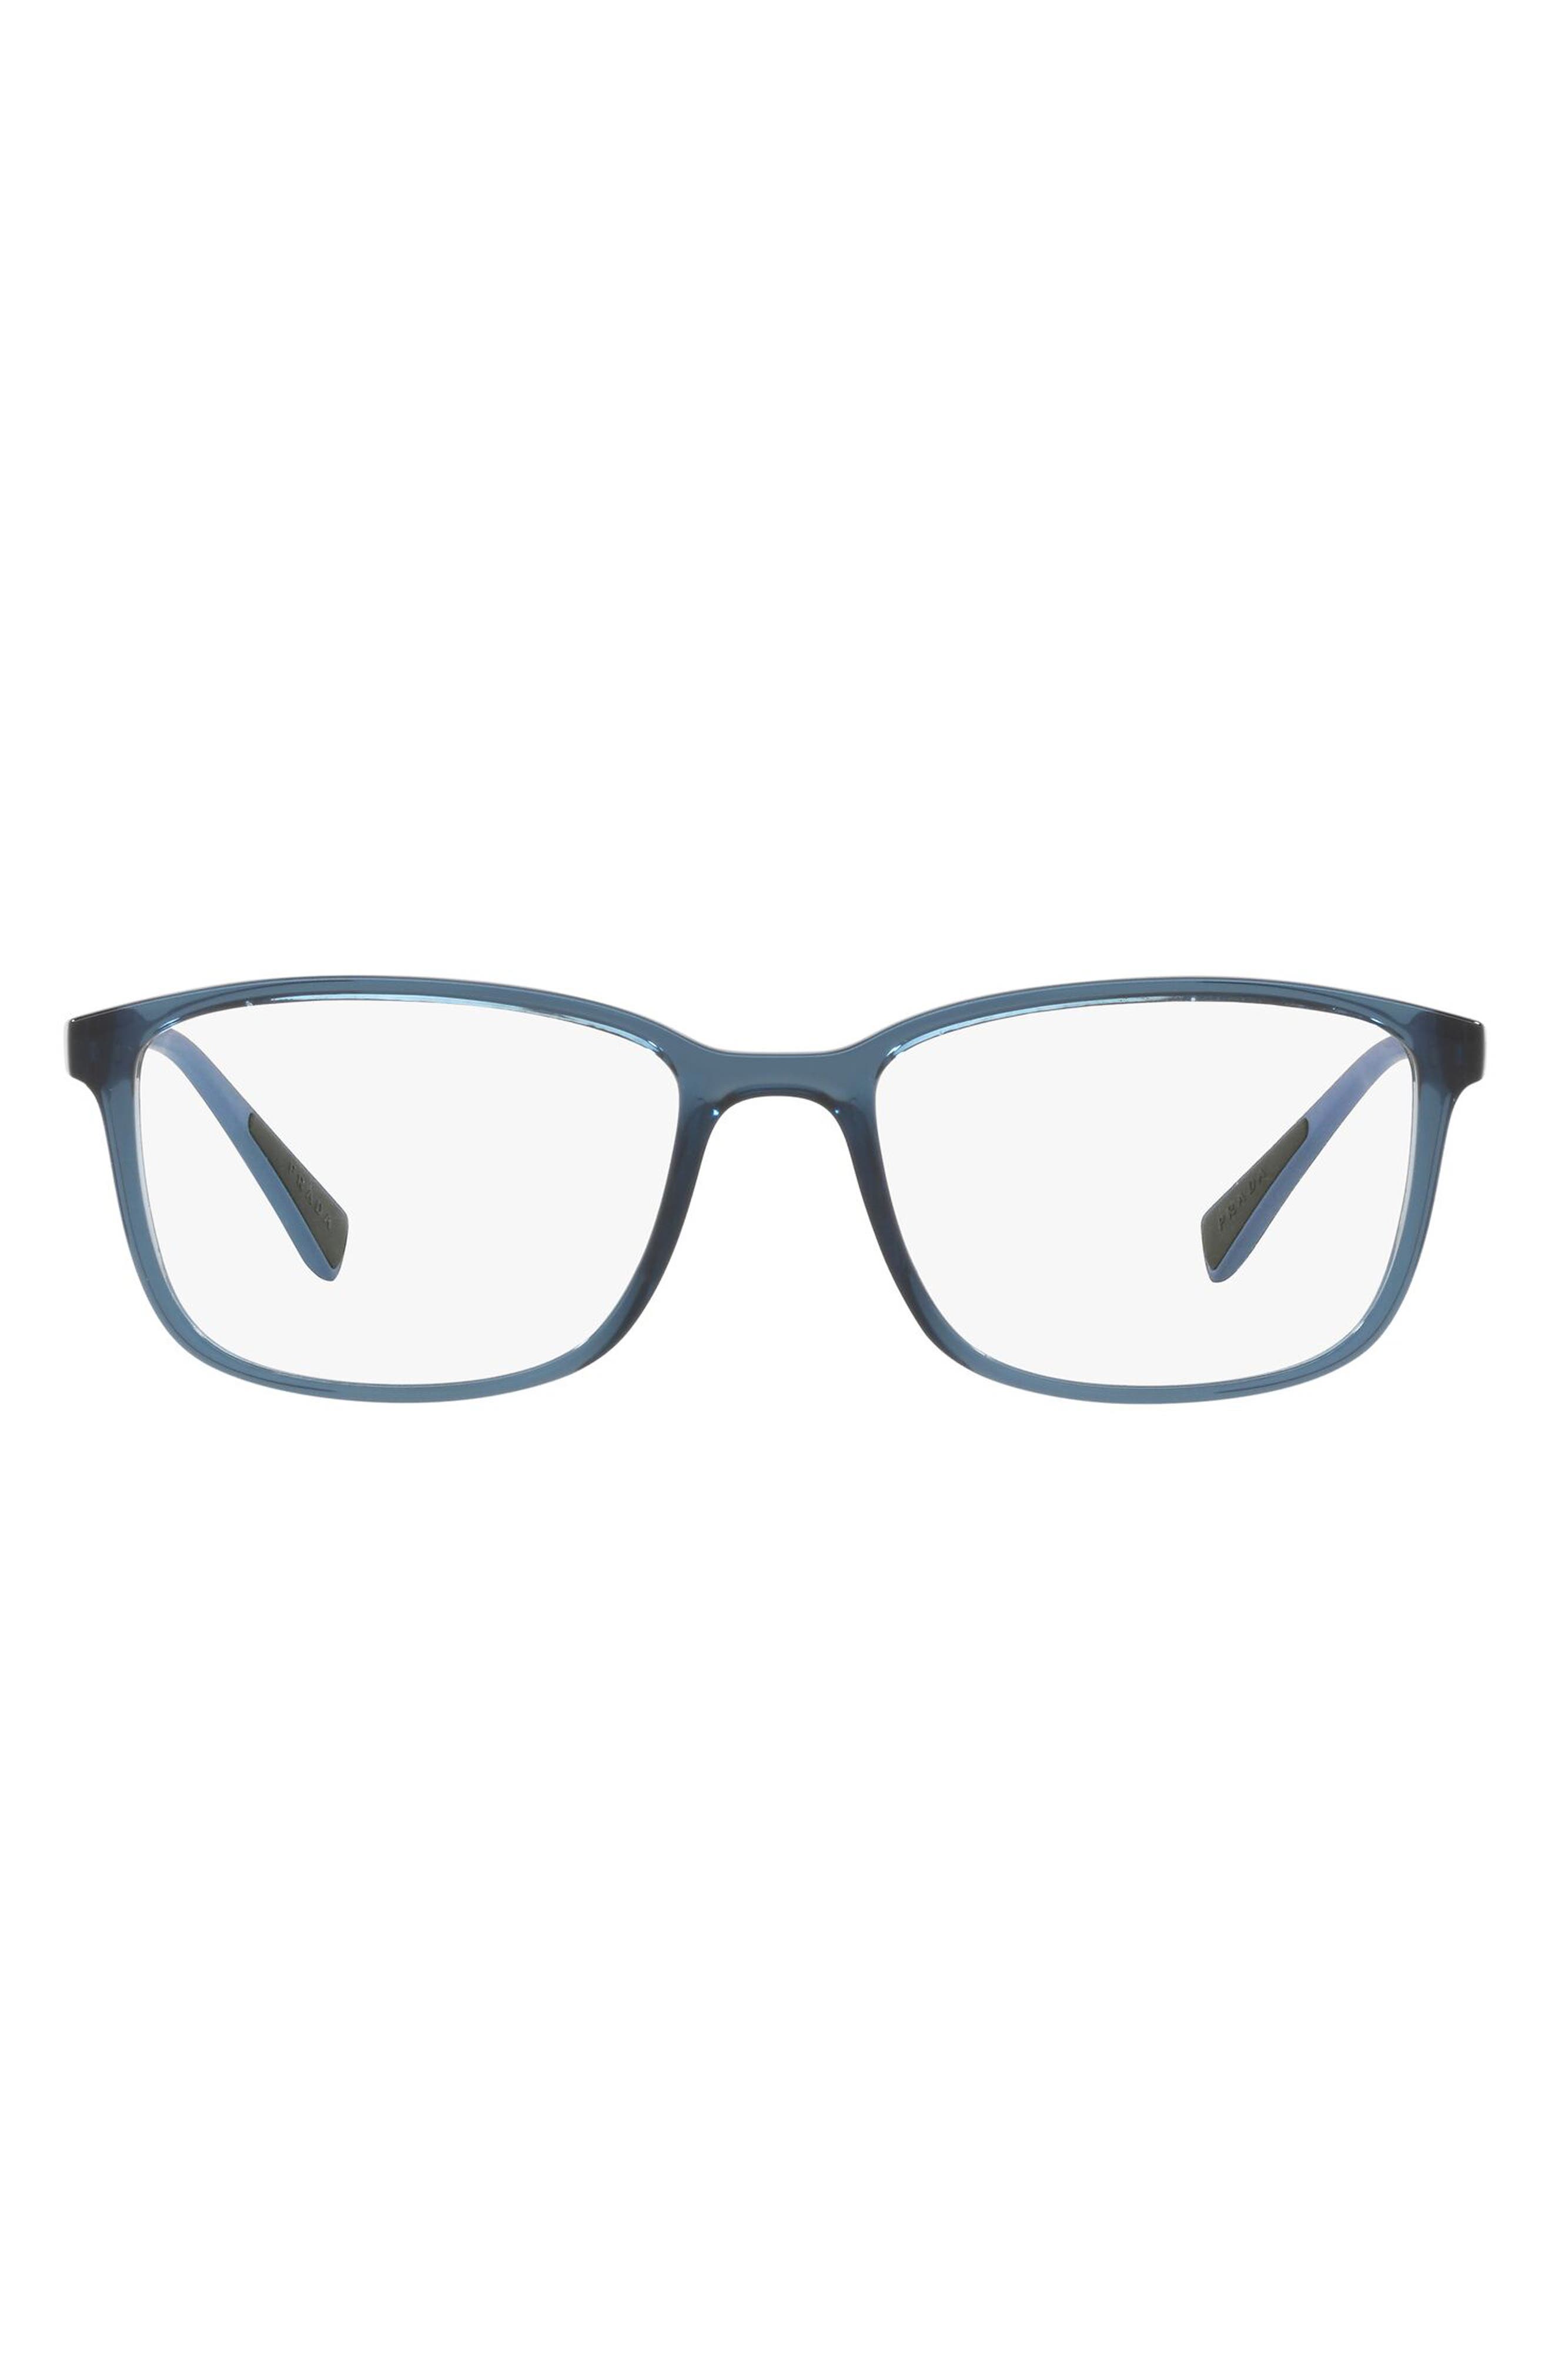 Prada 53mm Rectangle Optical Glasses in Transparent Blue